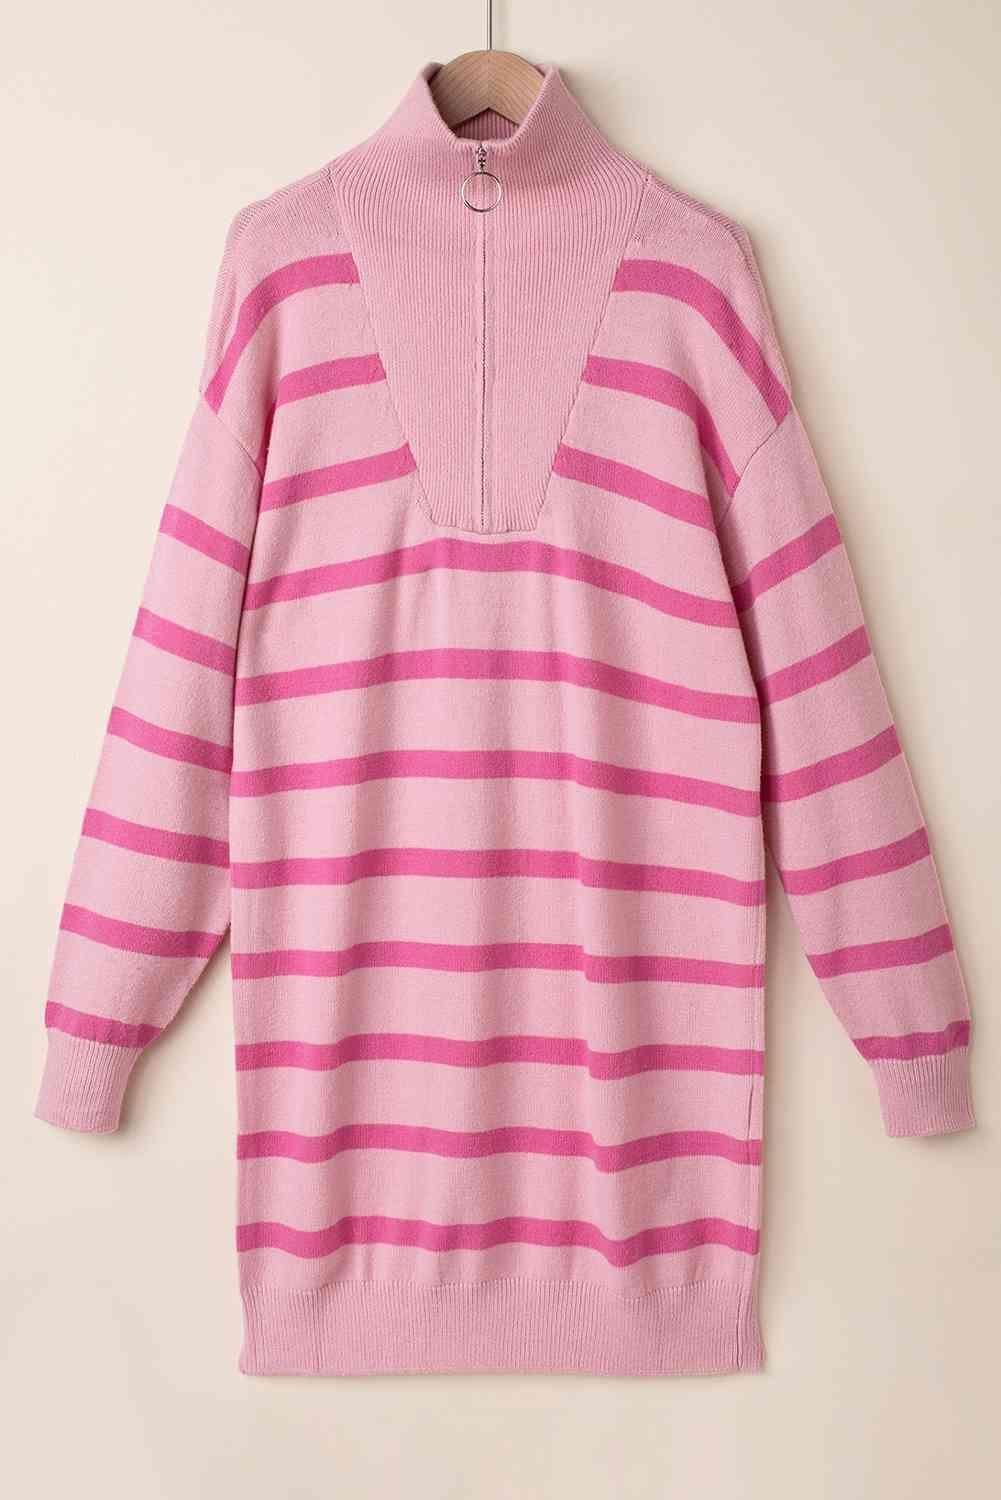 Low Temp Fashion Striped Quarter Zip Sweater Dress - MXSTUDIO.COM